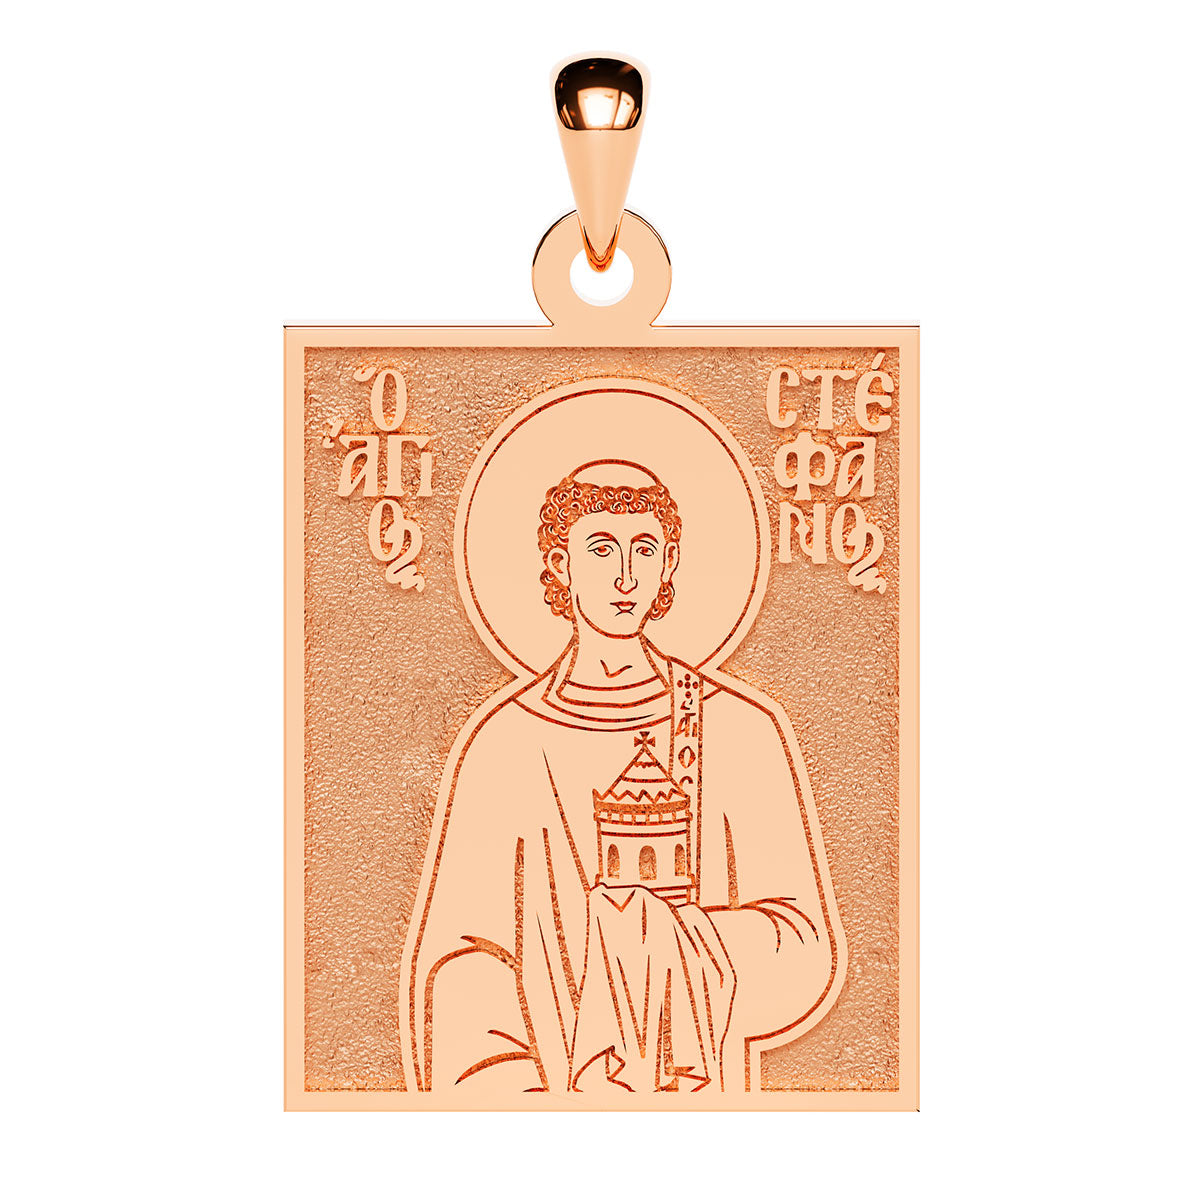 Saint Stephen (Stephanos) the Apostle Greek Orthodox Icon Tag Medal